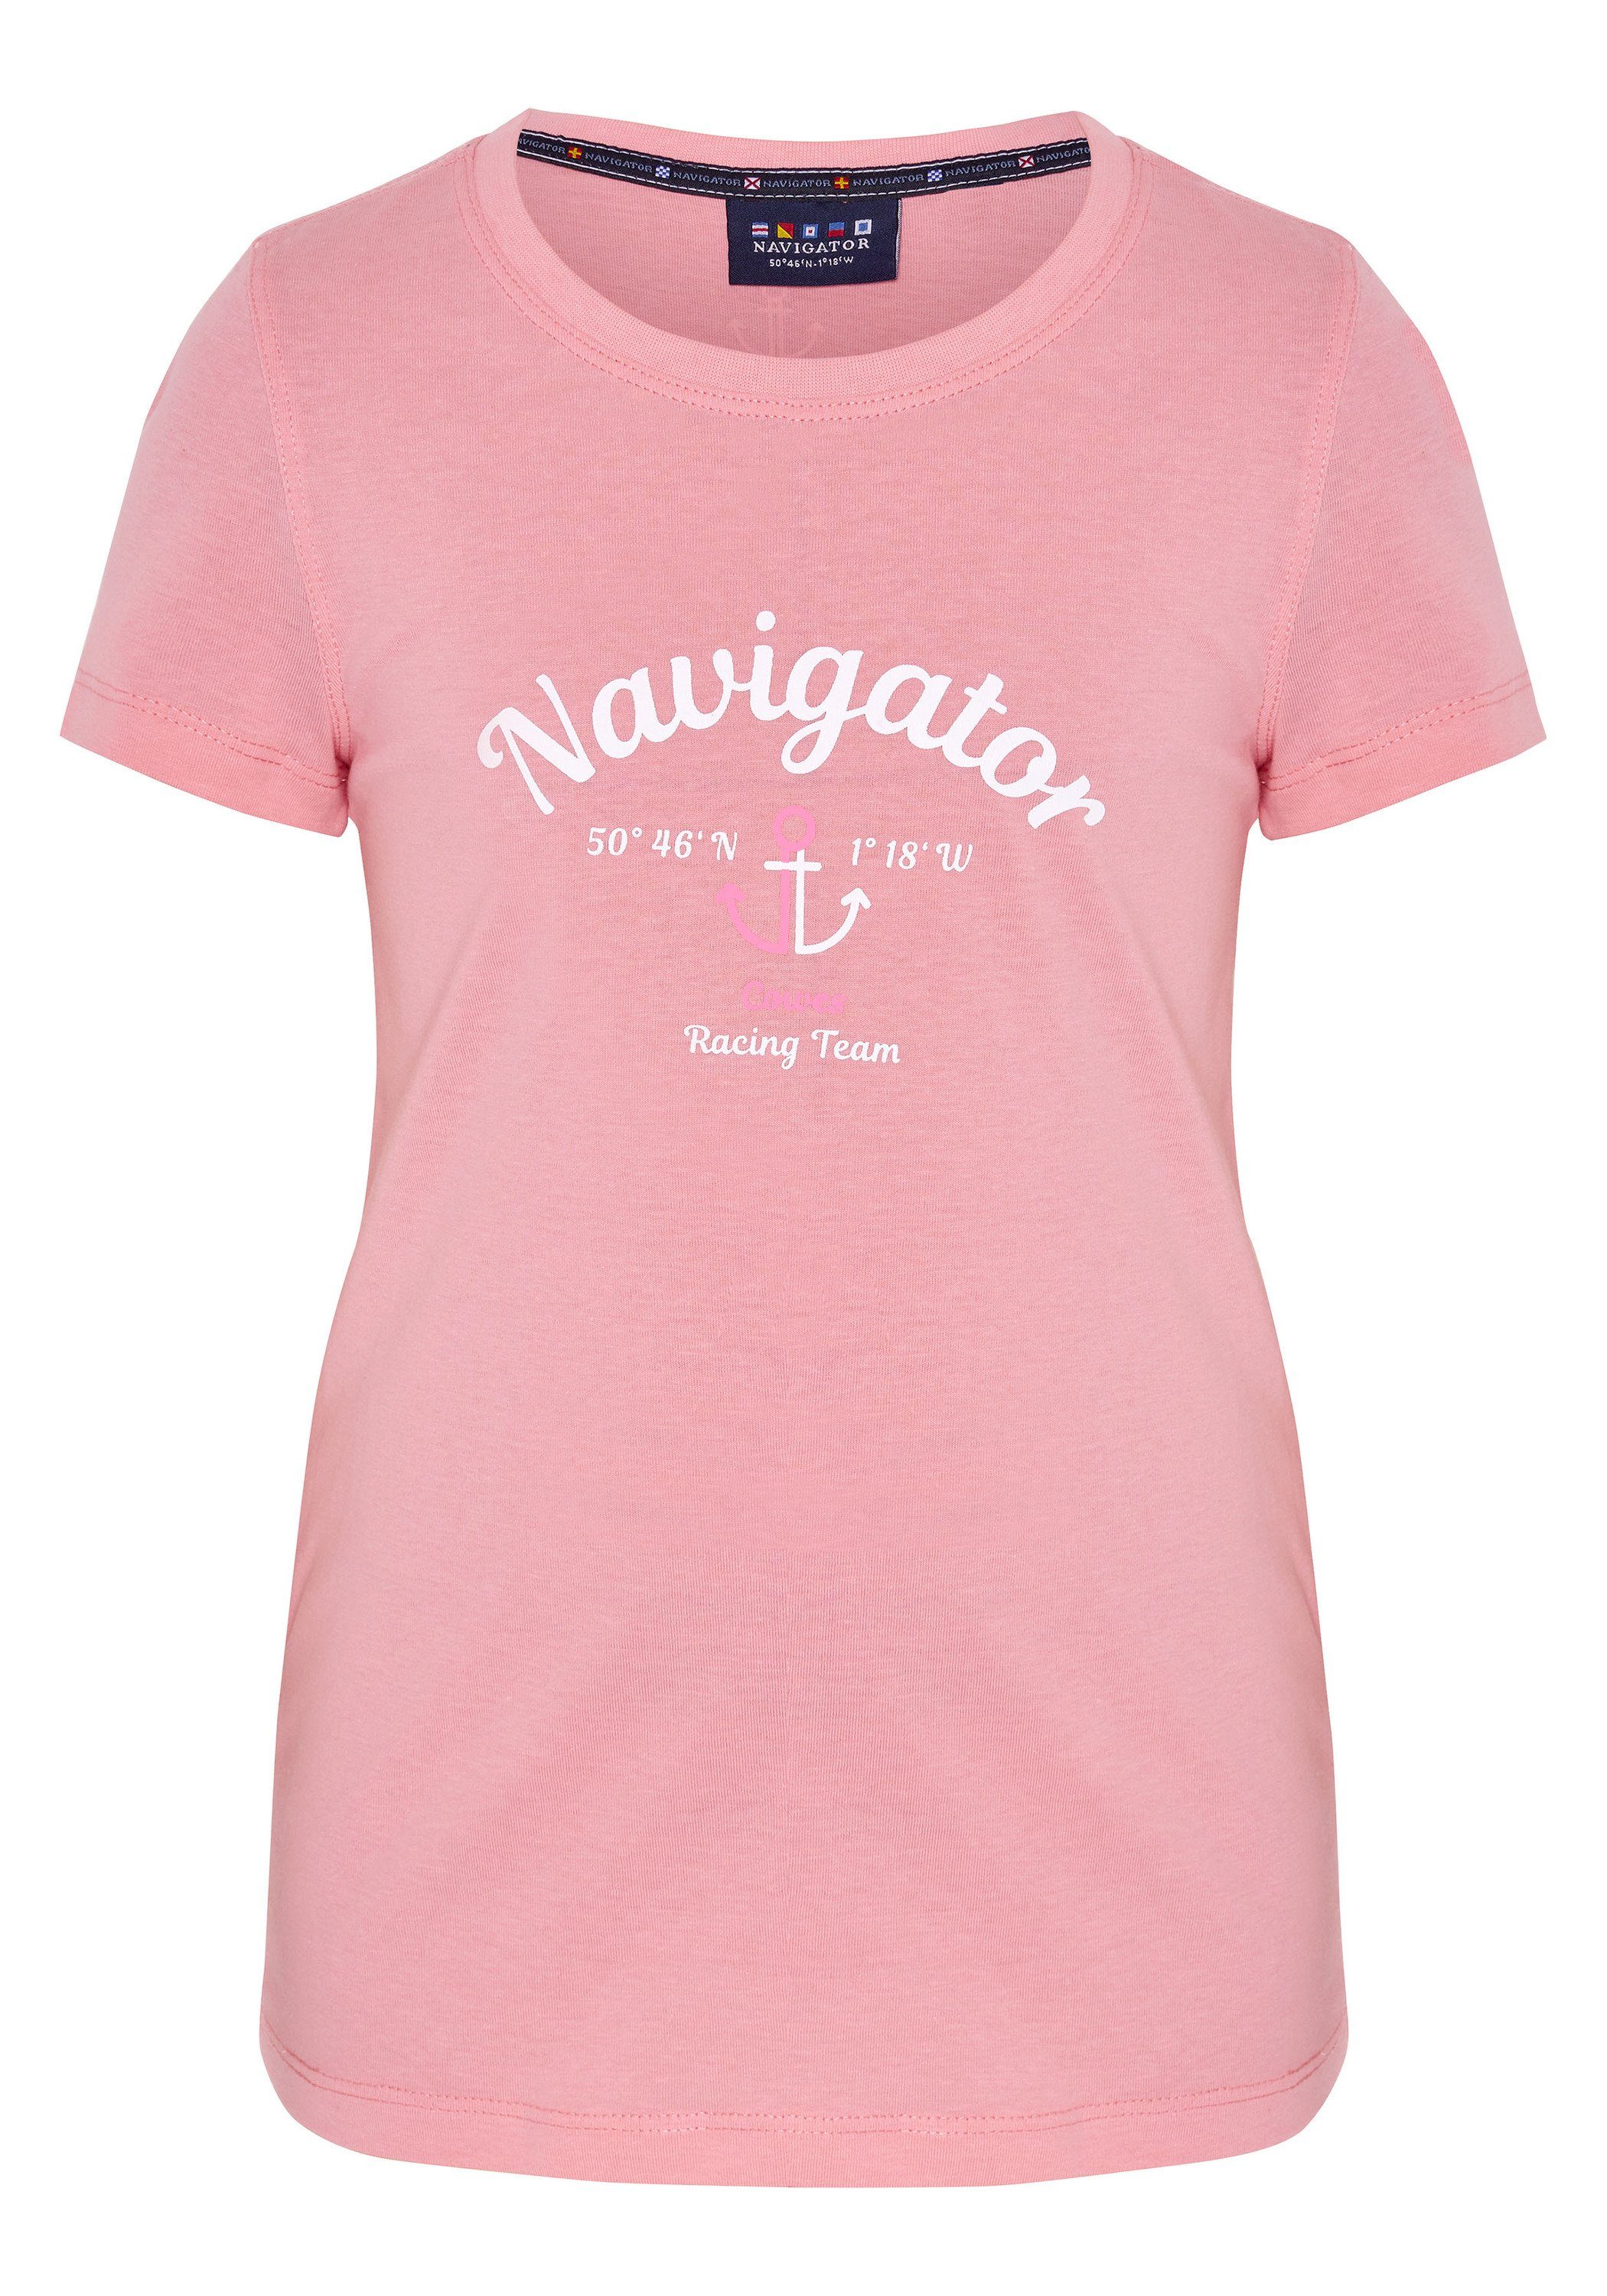 Neon Sweatware, Pastell Pink weicher aus GOTS NAVIGATOR Print-Shirt